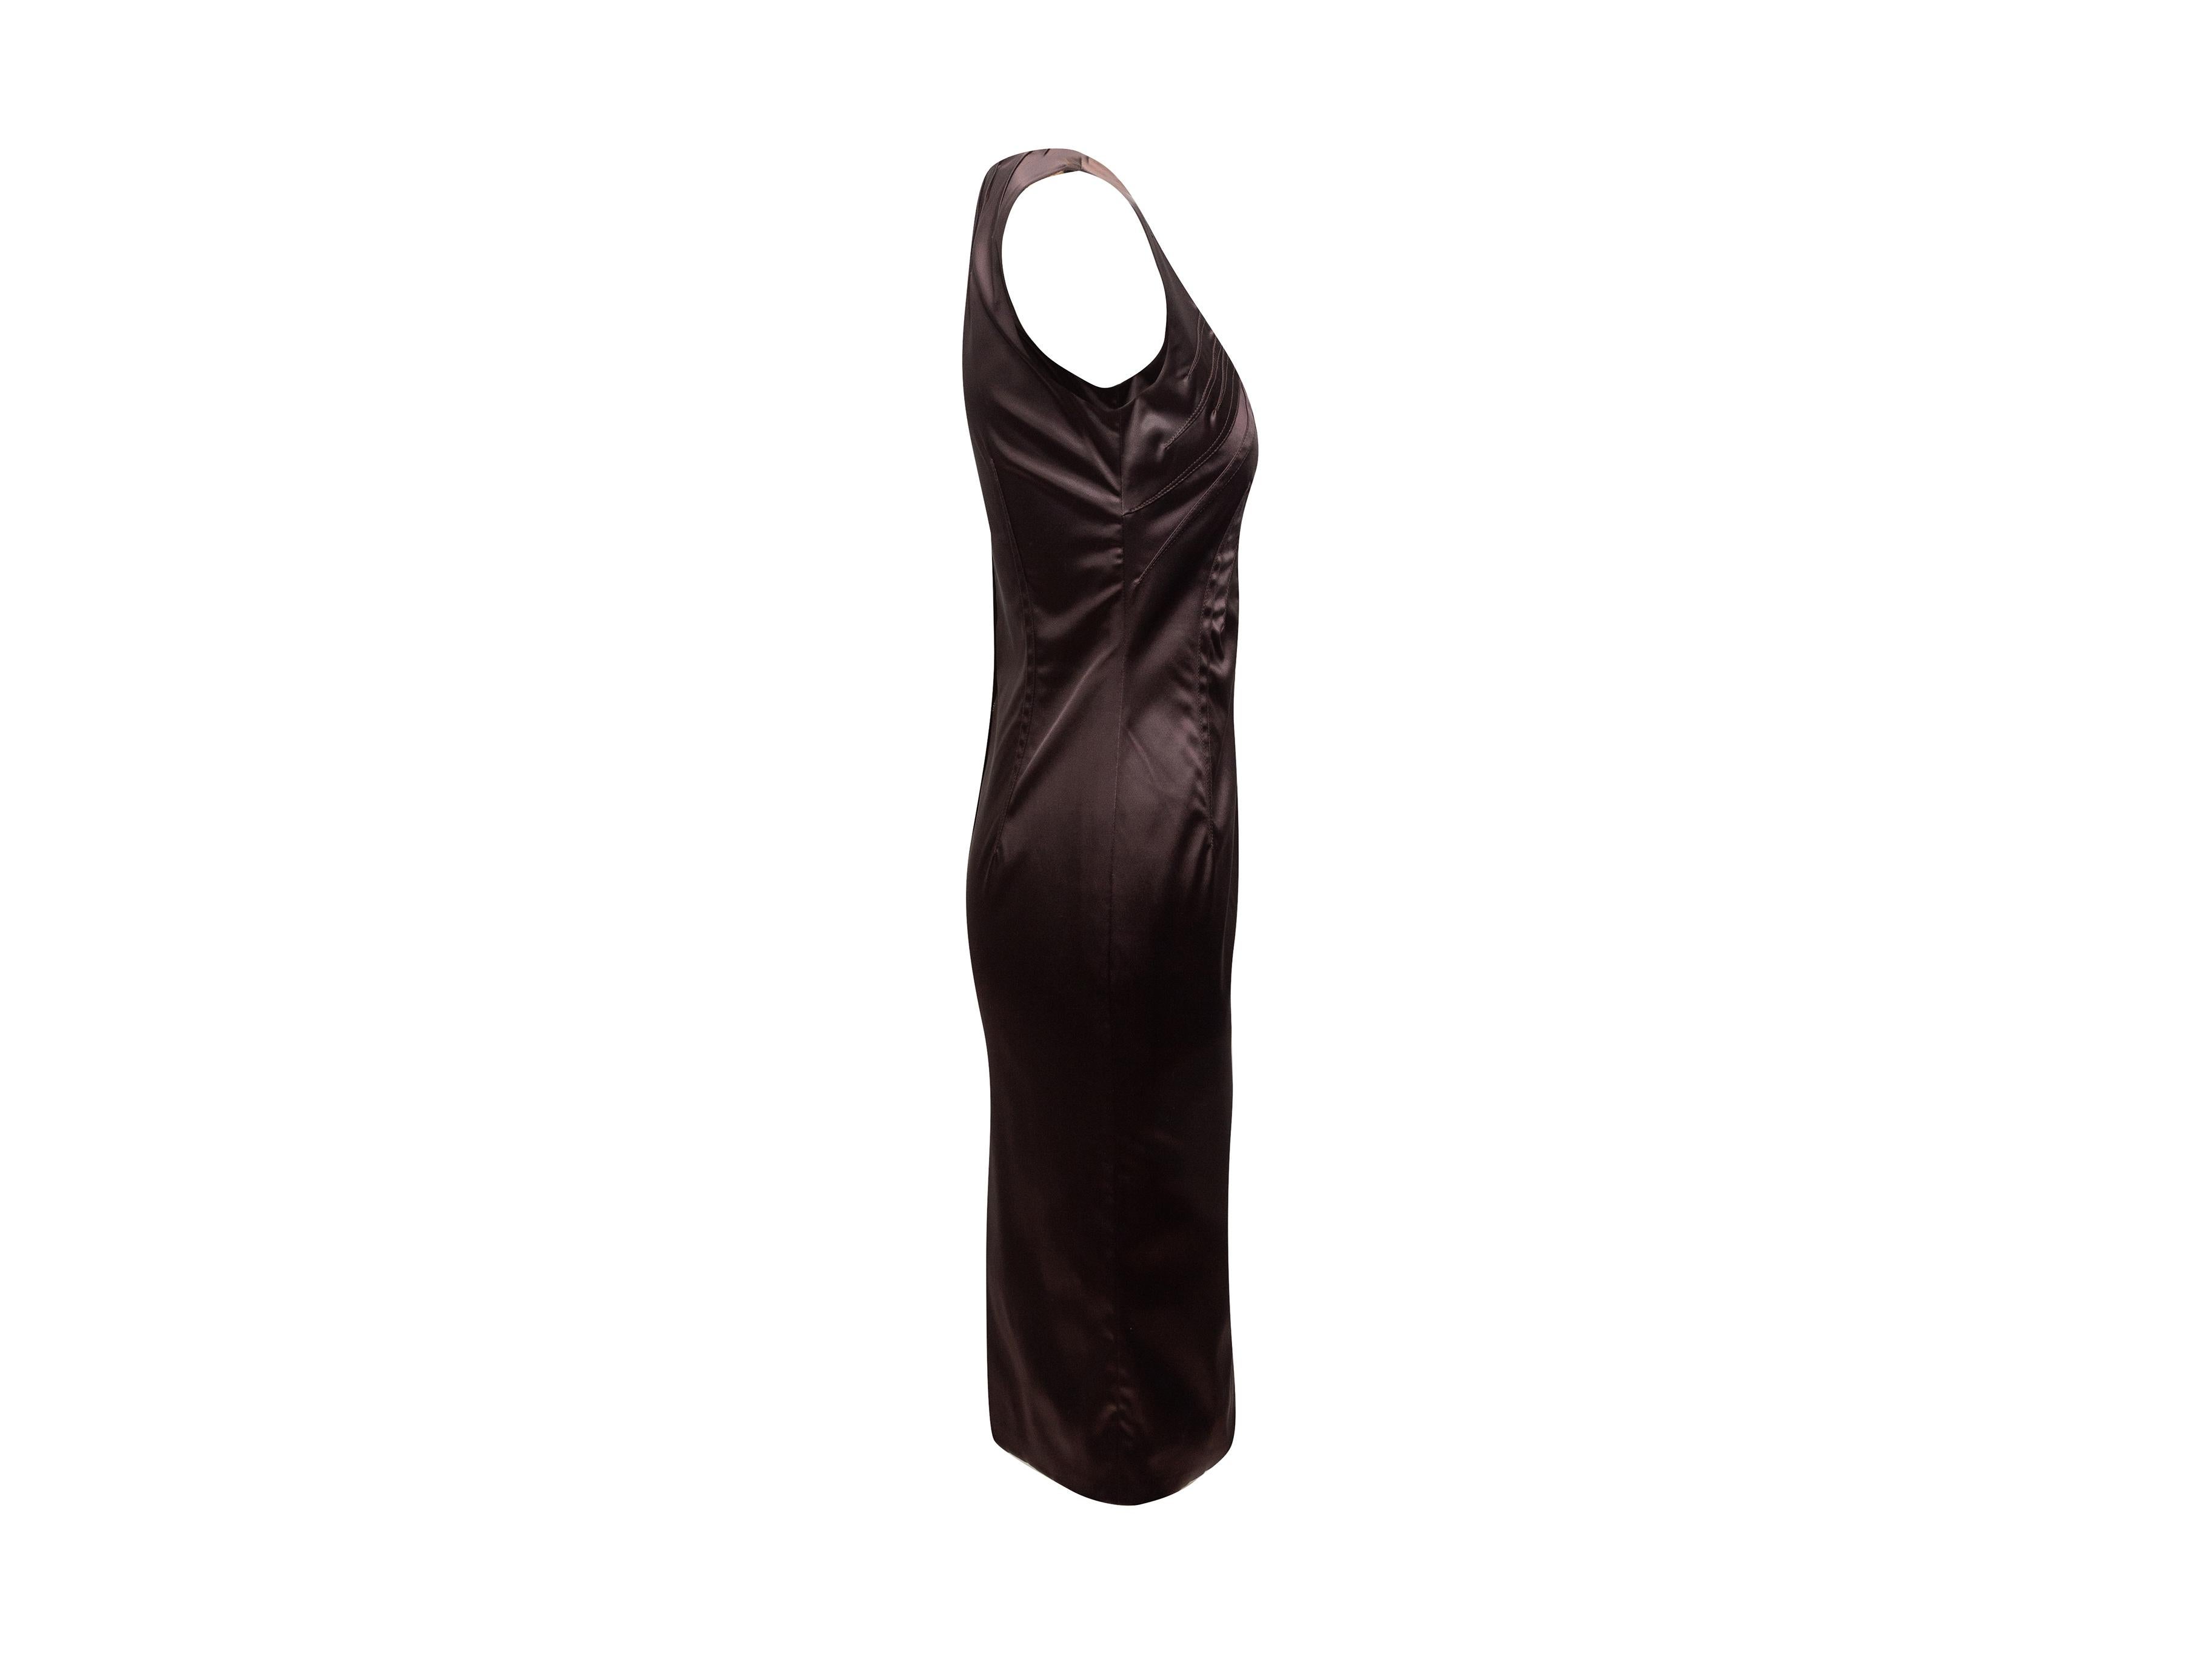 Product details: Dark brown satin sleeveless dress by Dolce & Gabbana. Scoop neckline featuring pleating. Zip closure at back. Designer size 44. 32